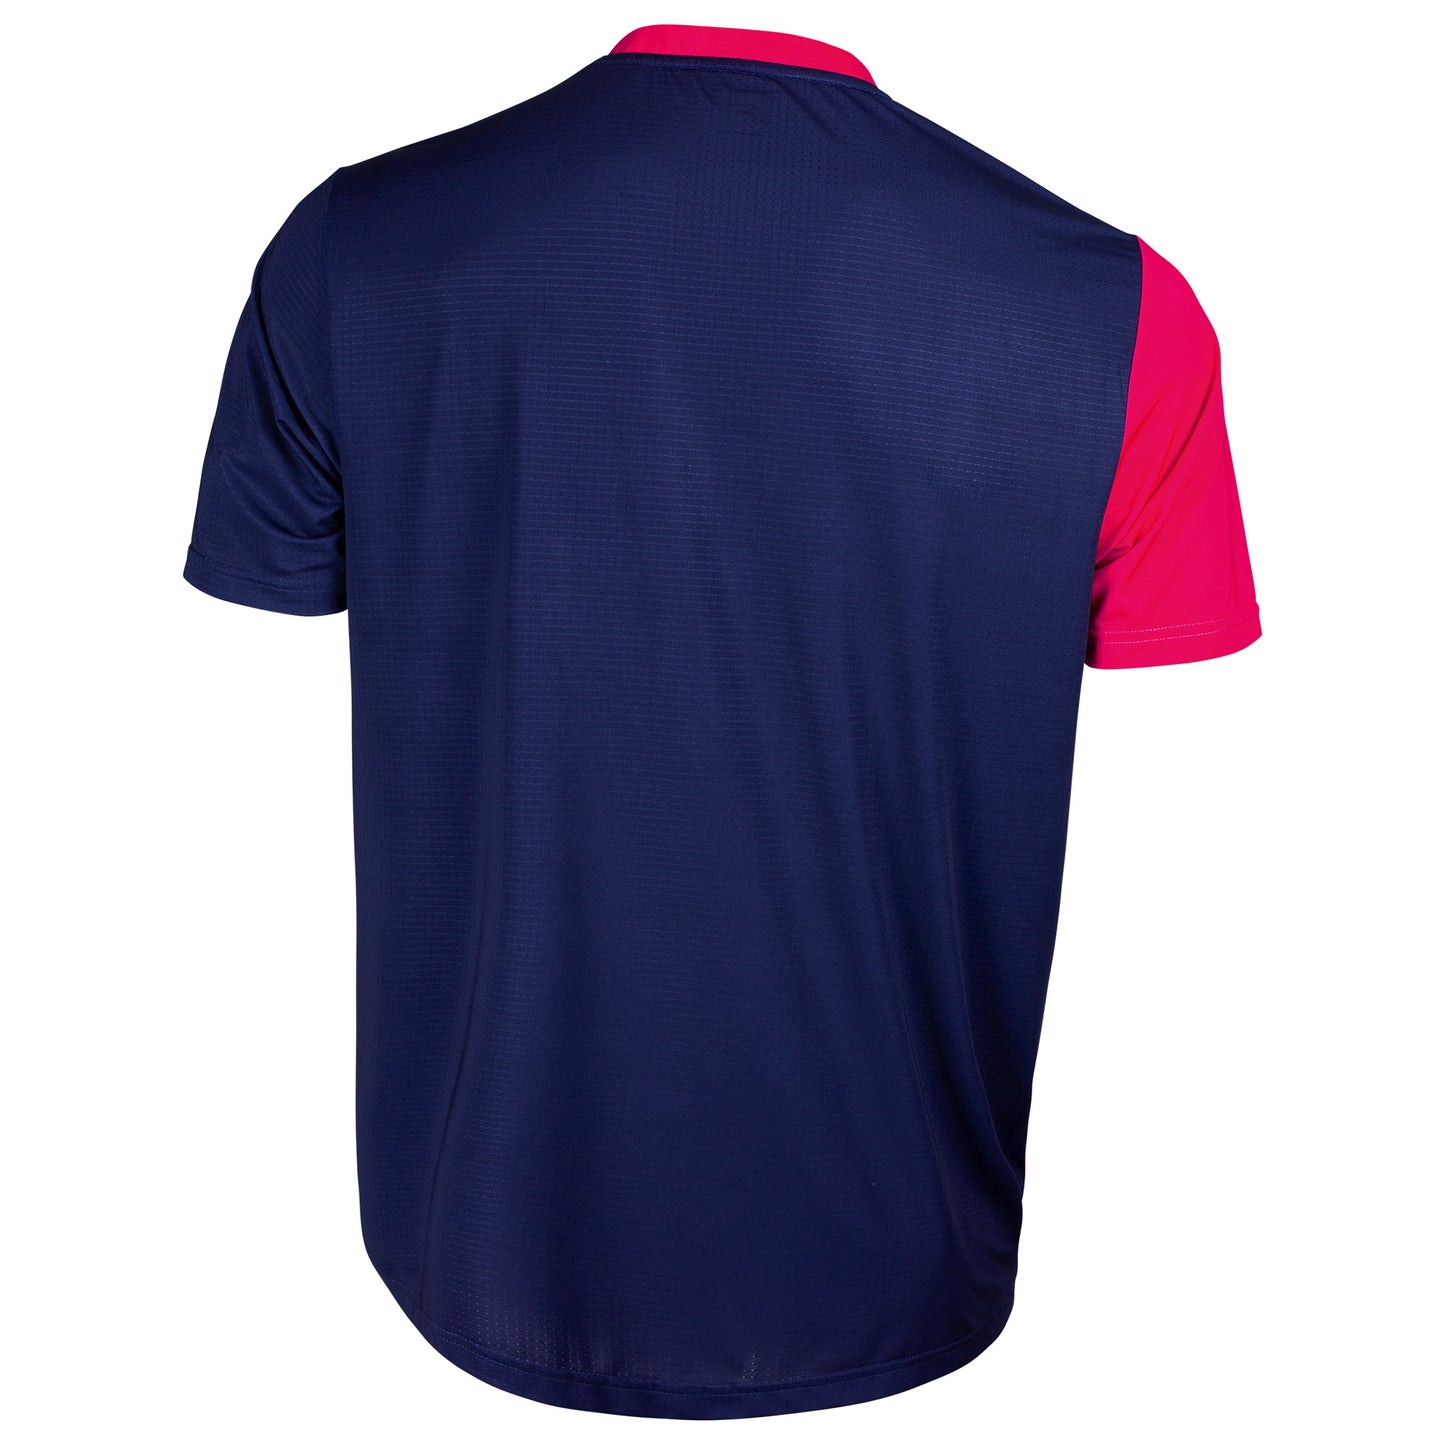 Tibhar TT-Shirt Azur Pink Dark Blue